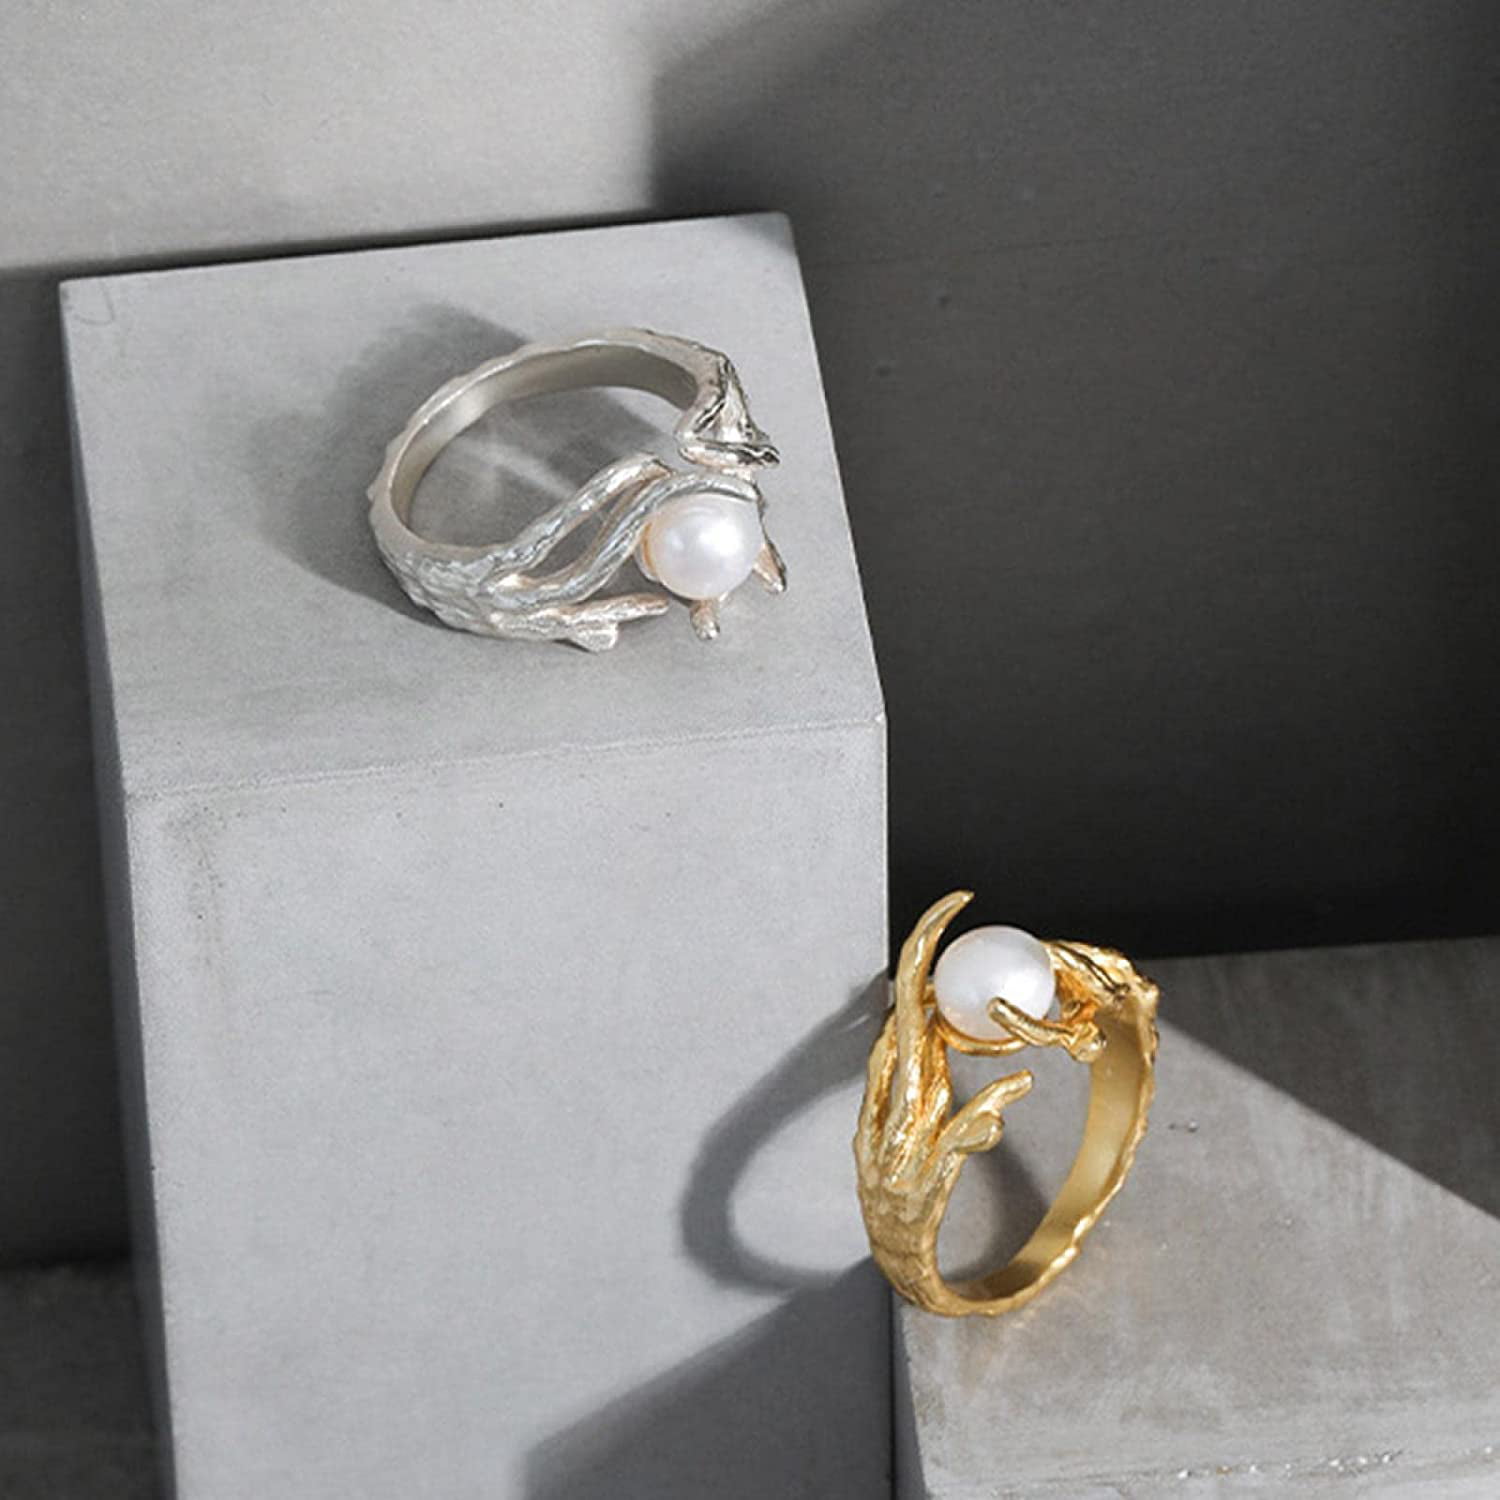 Details about   Art Deco 1.55CT Round Cut Diamond Engagement Wedding Ring 14k White Gold Finish 